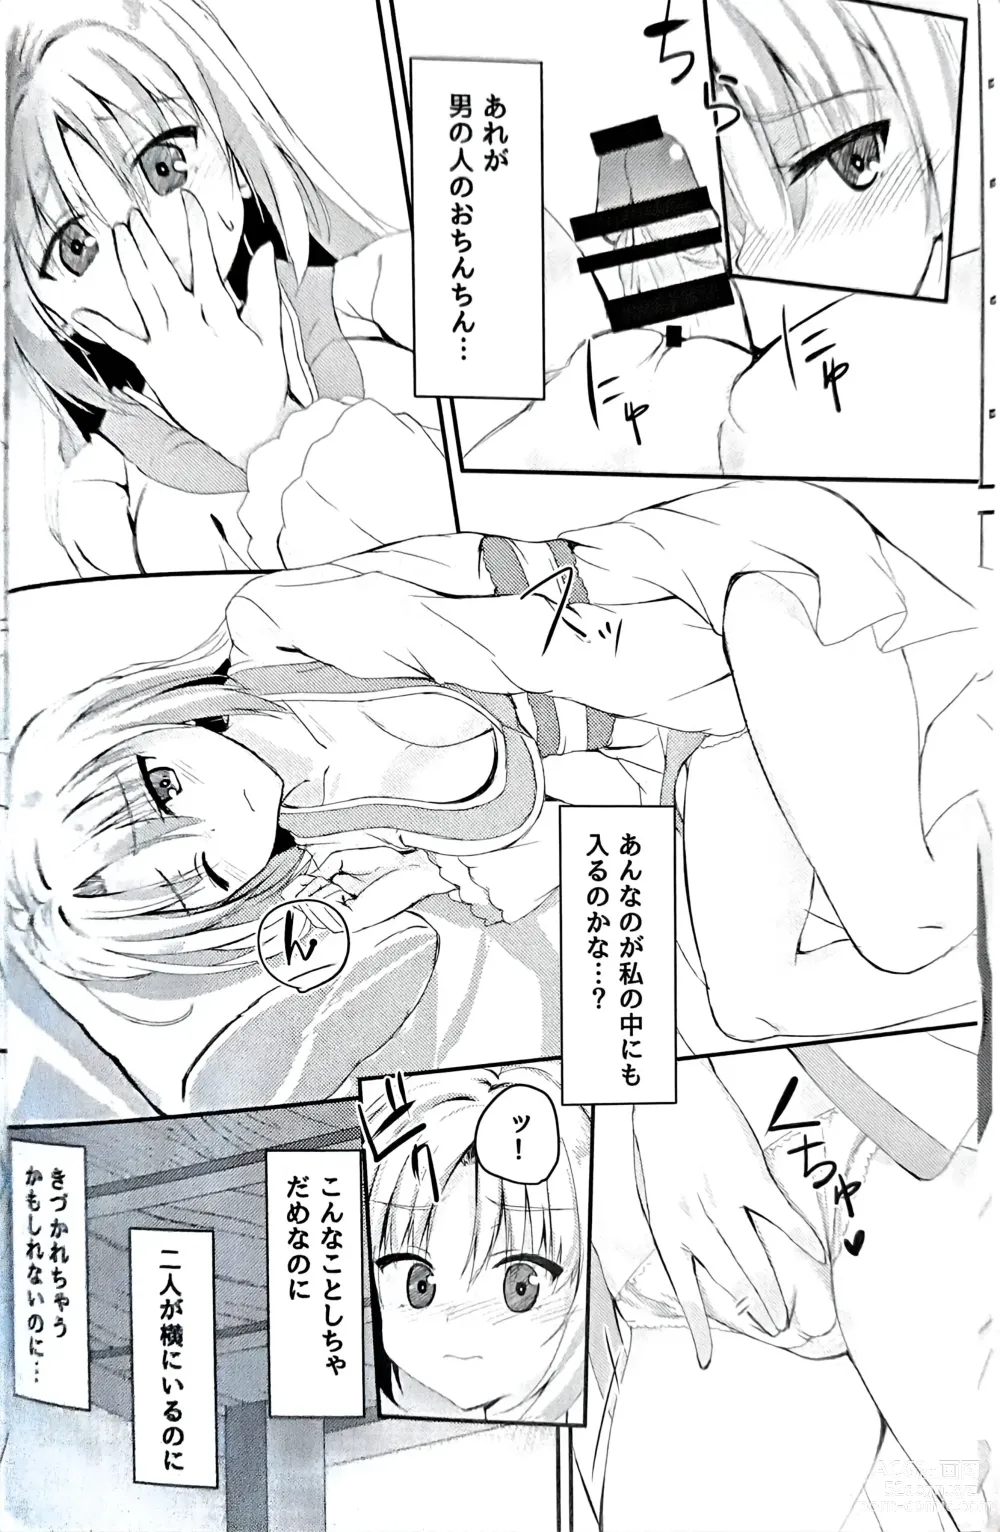 Page 5 of doujinshi にんじゃさんとみこひめさまの悩み